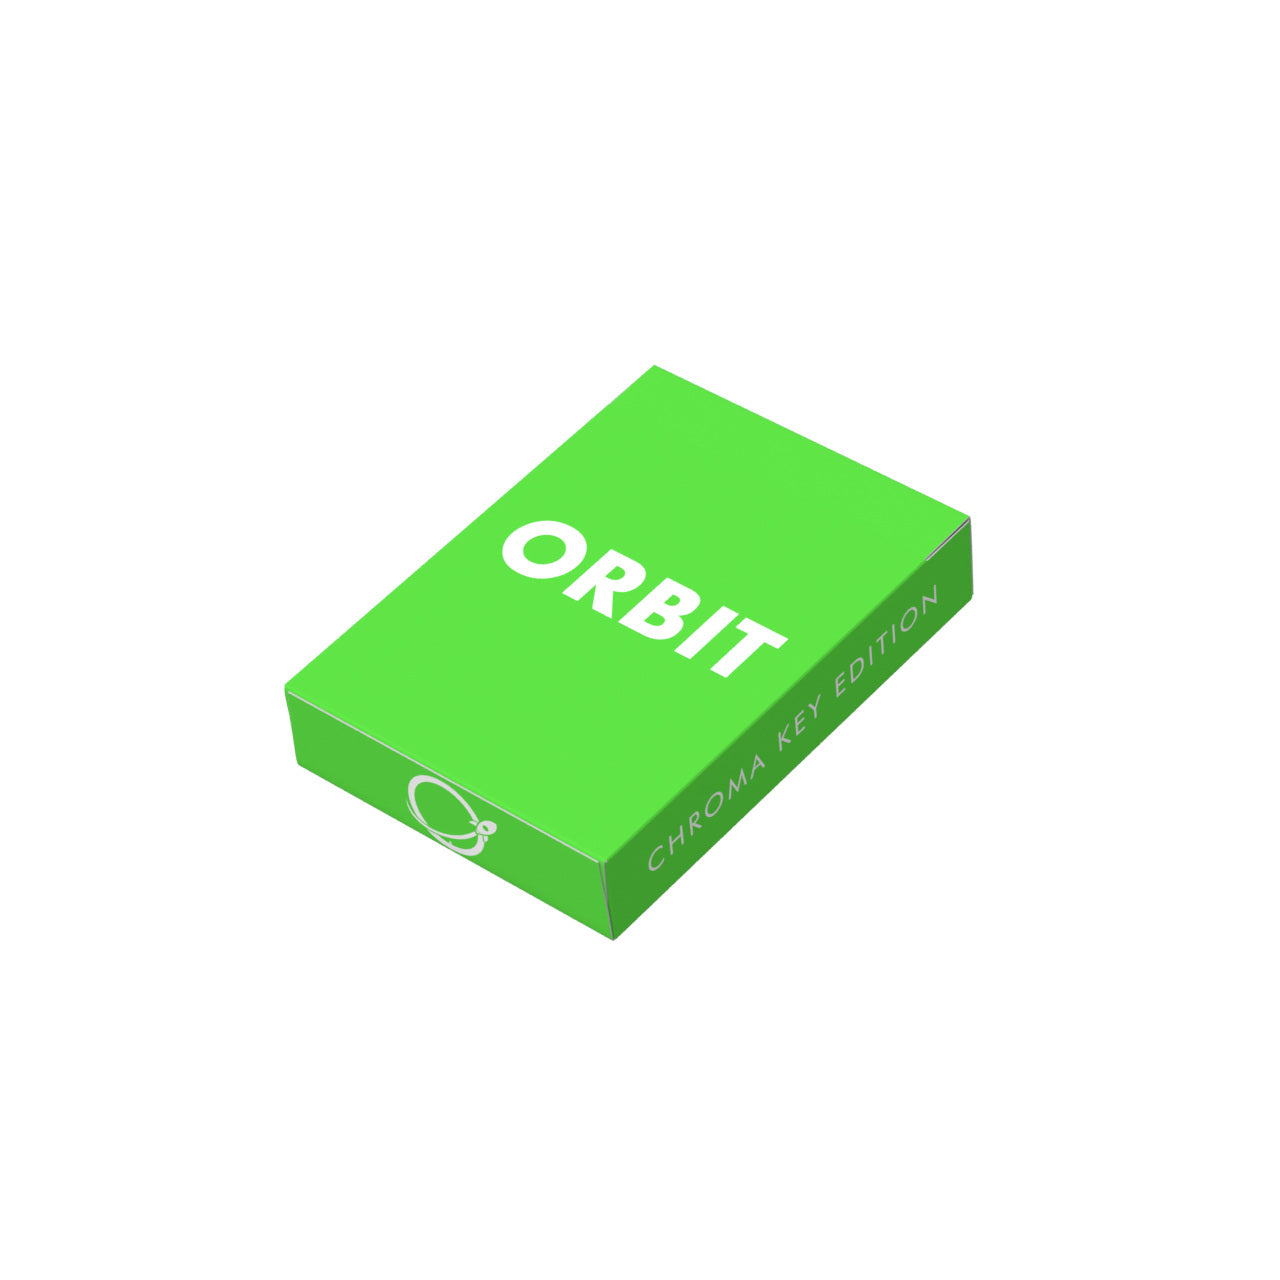 Orbit - Chroma Key Edition